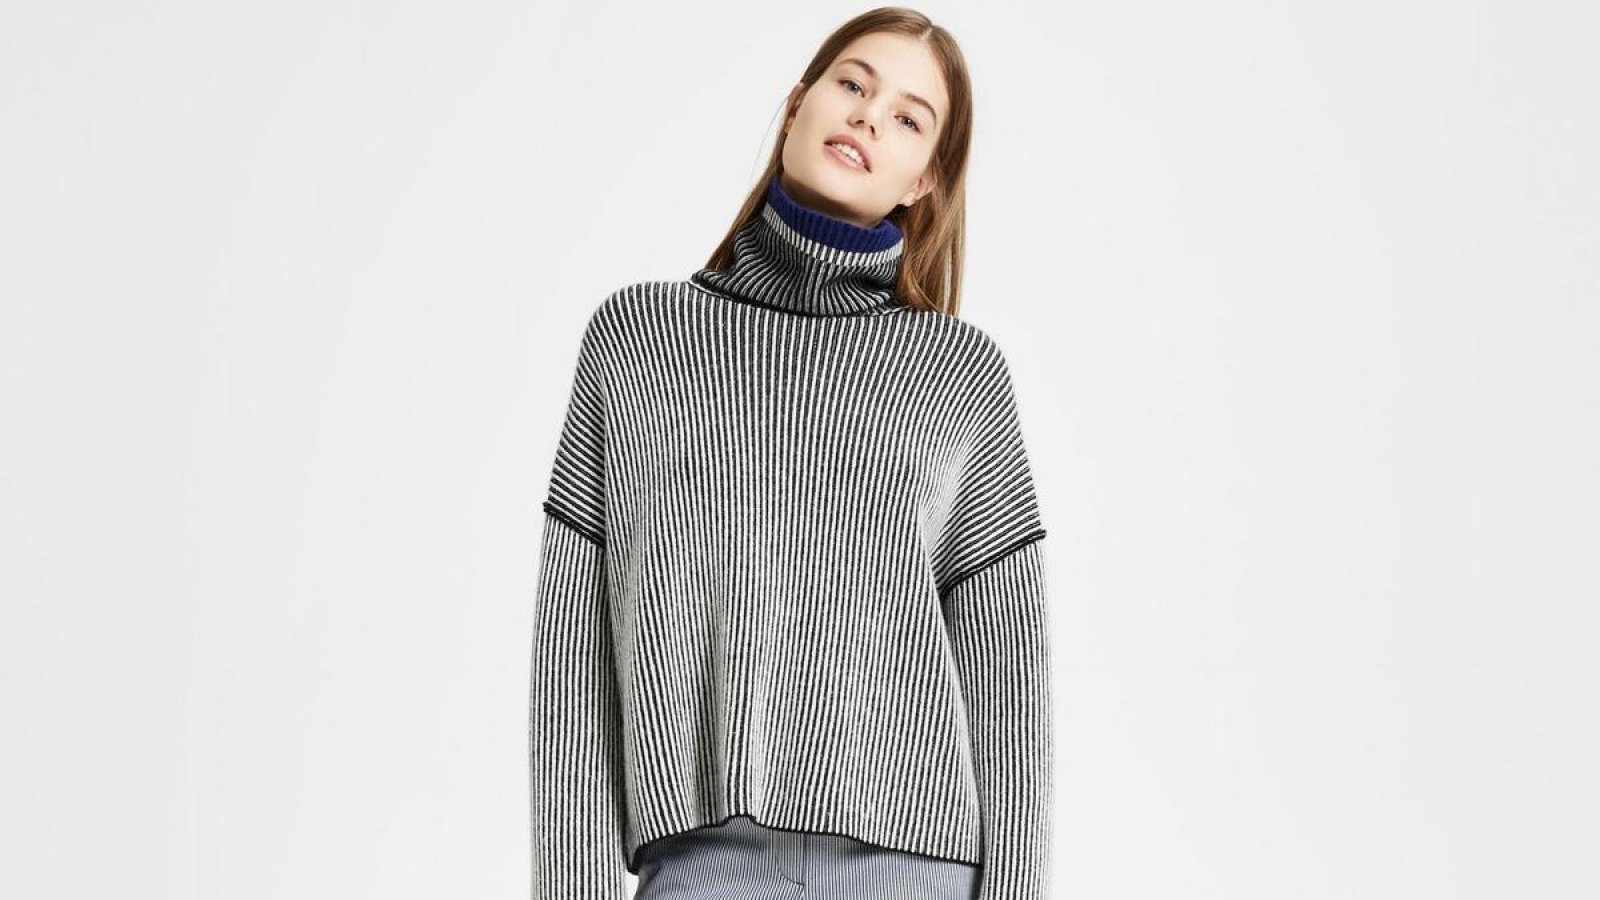 Theory Oversized Stripe Knit Cashmere Sweater